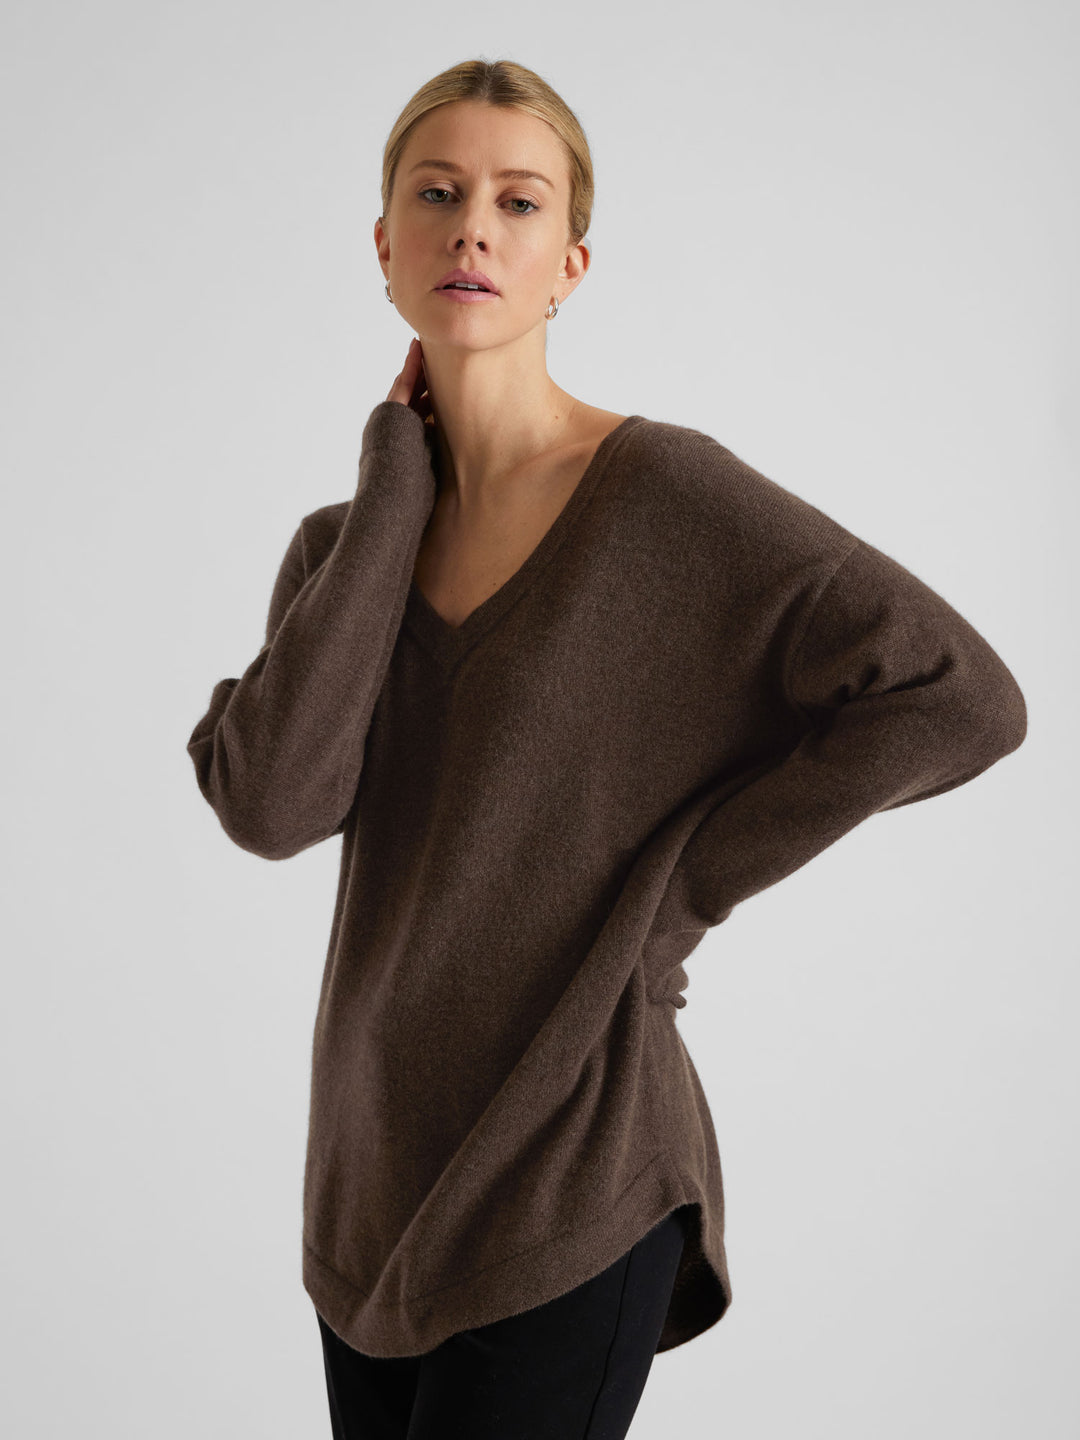 Cashmere sweater v-neck "Alva" in 100% pure cashmere. Scandinavian design by Kashmina. Color: Dark Brown.